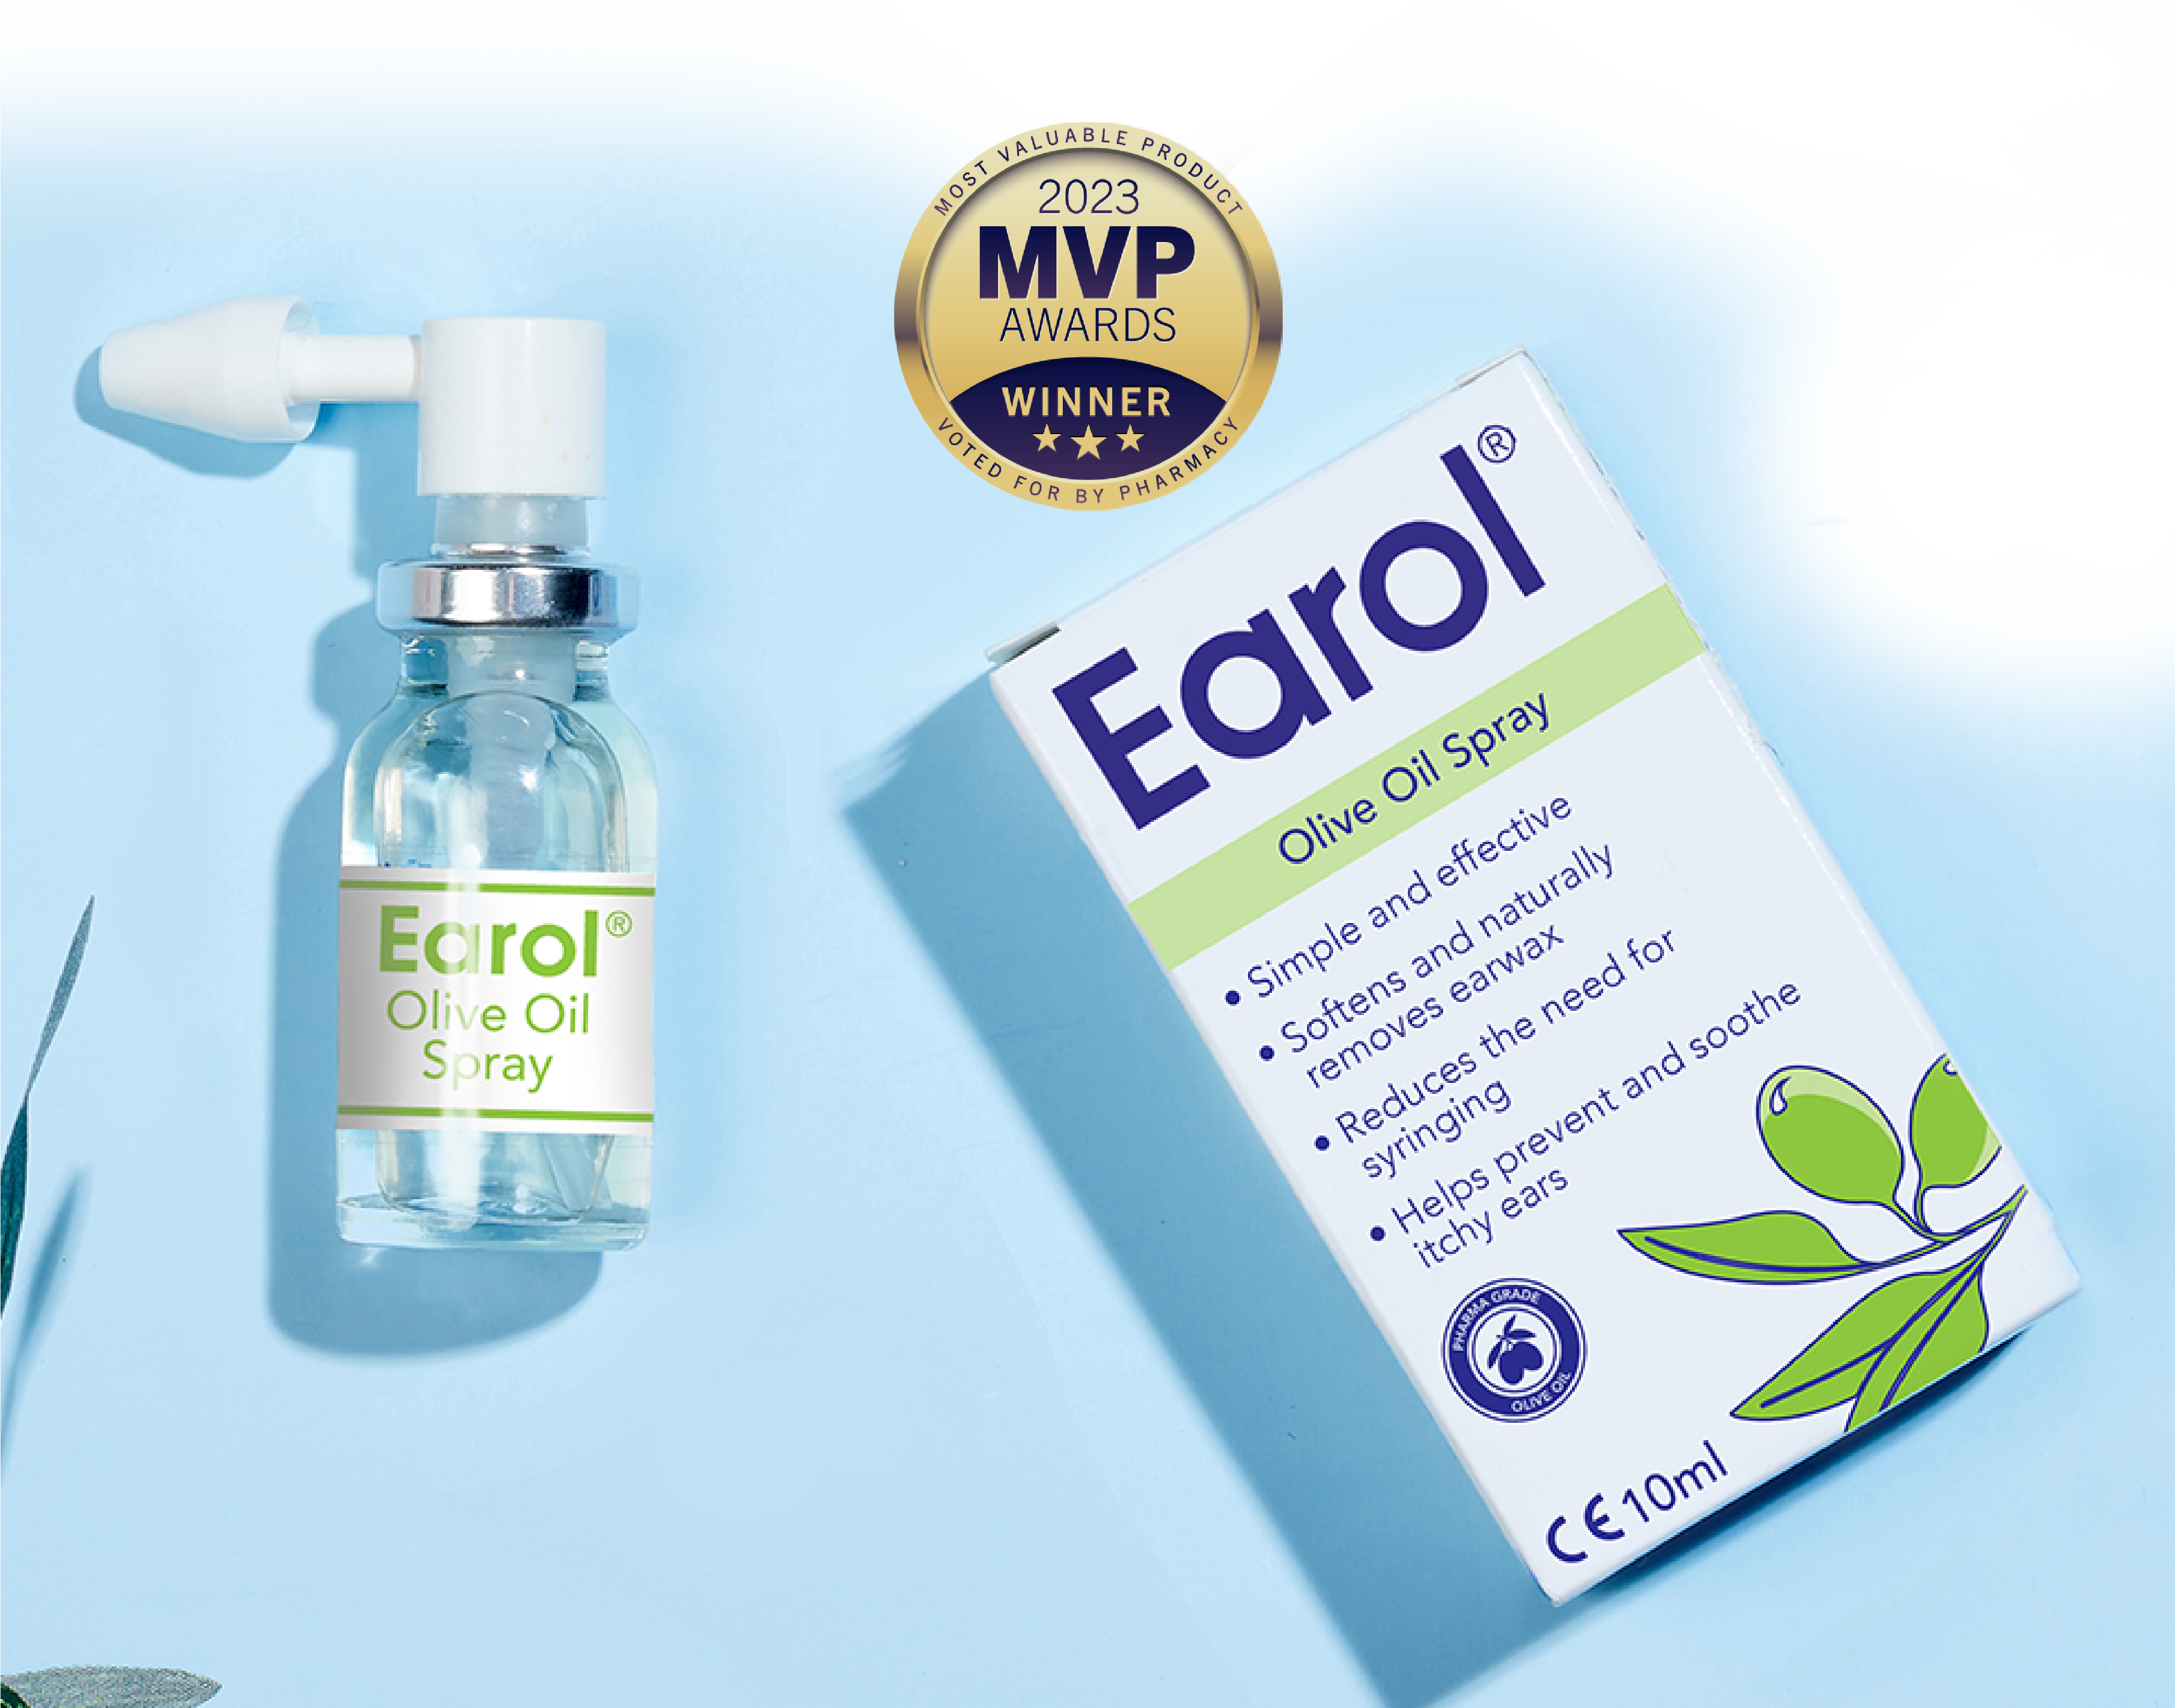 Earol Bottle & Packaging Image